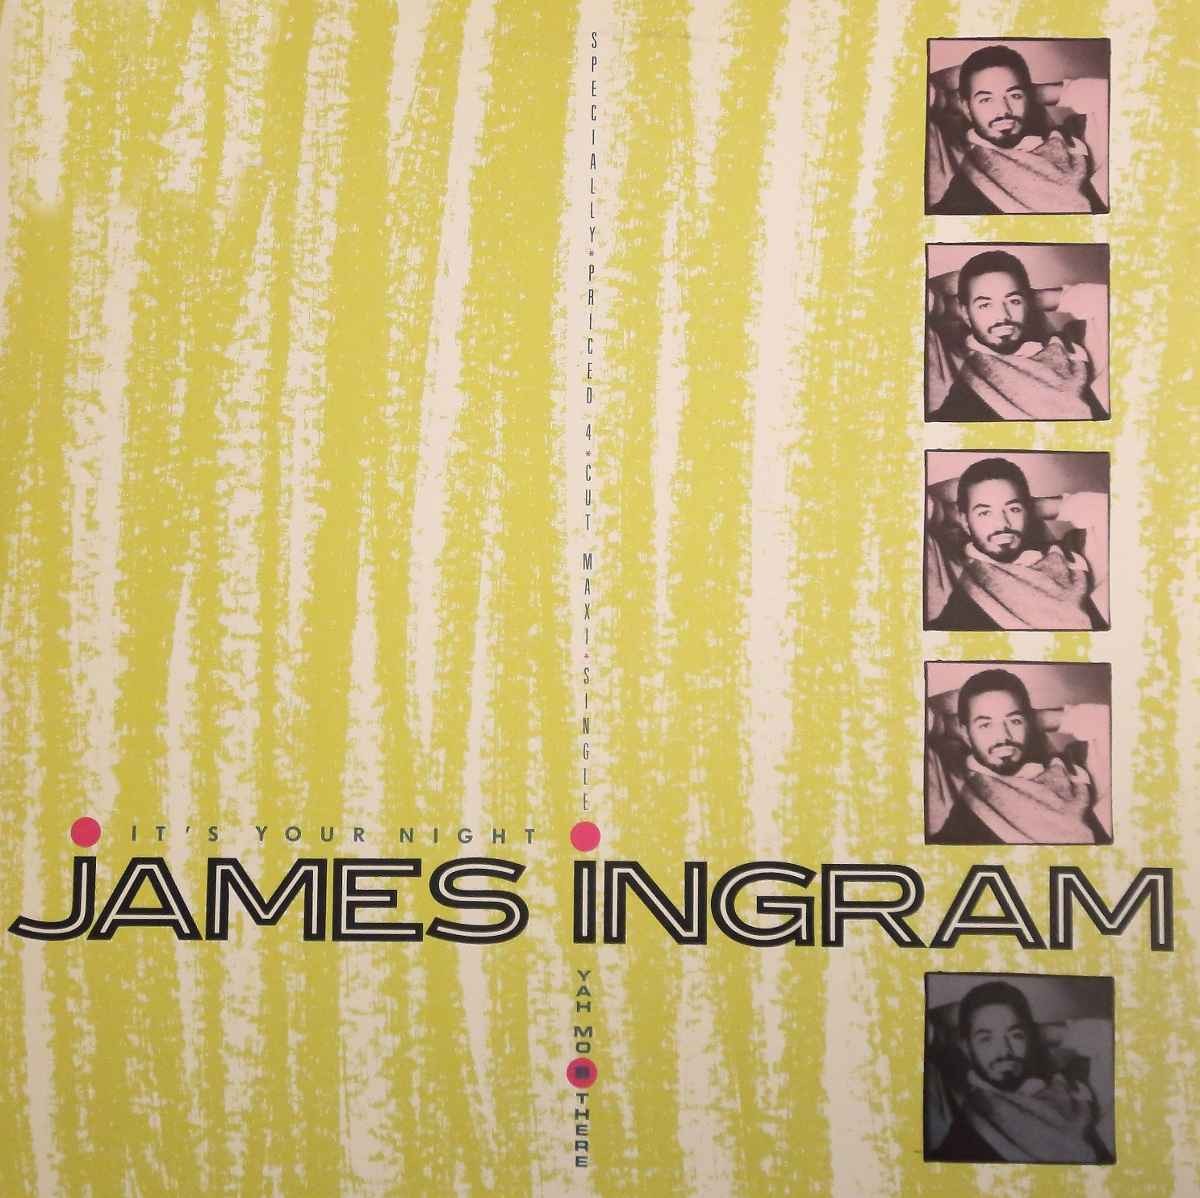 James Ingram feat Michael McDonald - Yah mo b there (Jellybean Remix / Jellybean Inst) / It's your night ( 2 Jellybean Mixes)